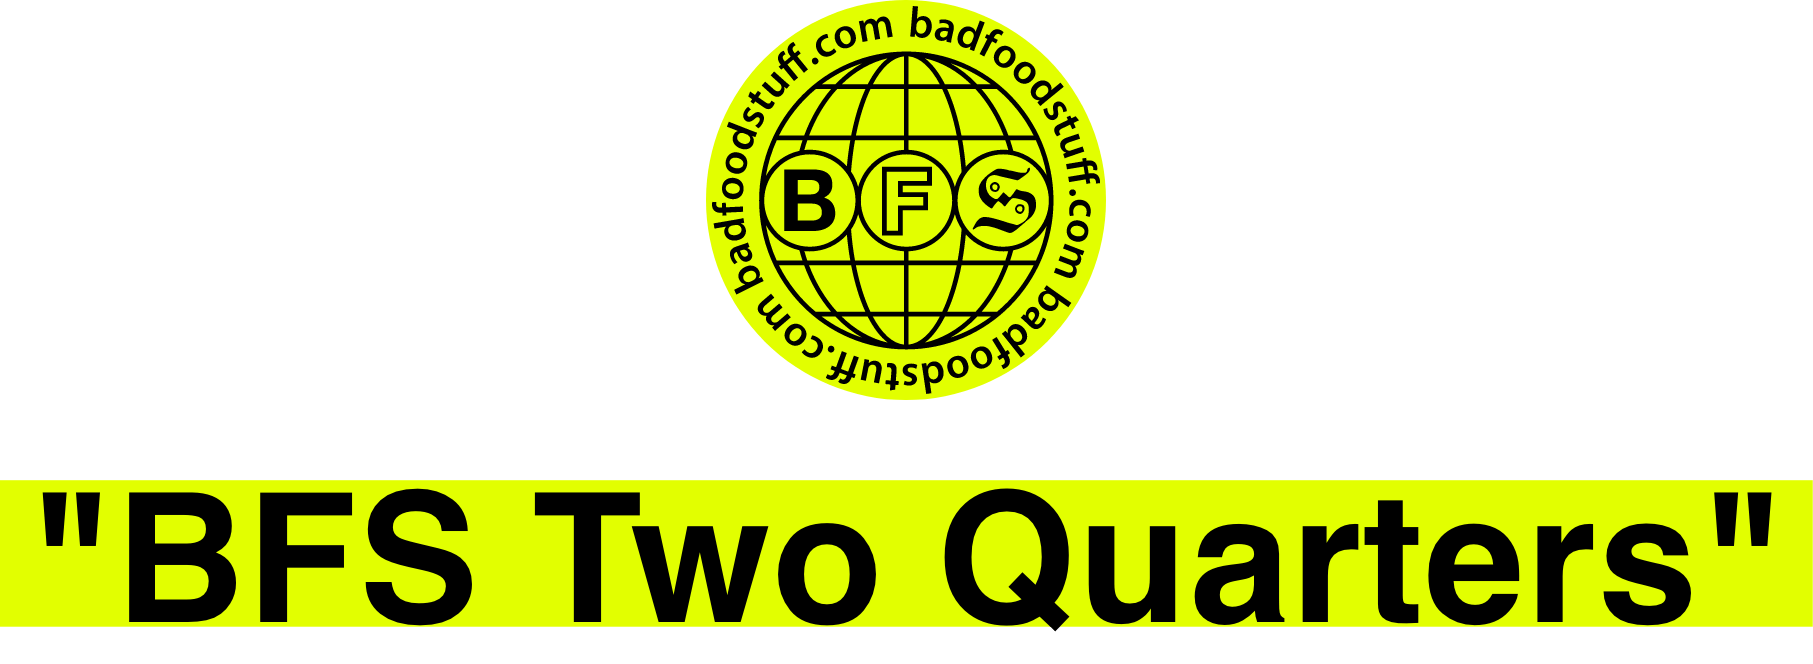 BFS Two Quarters